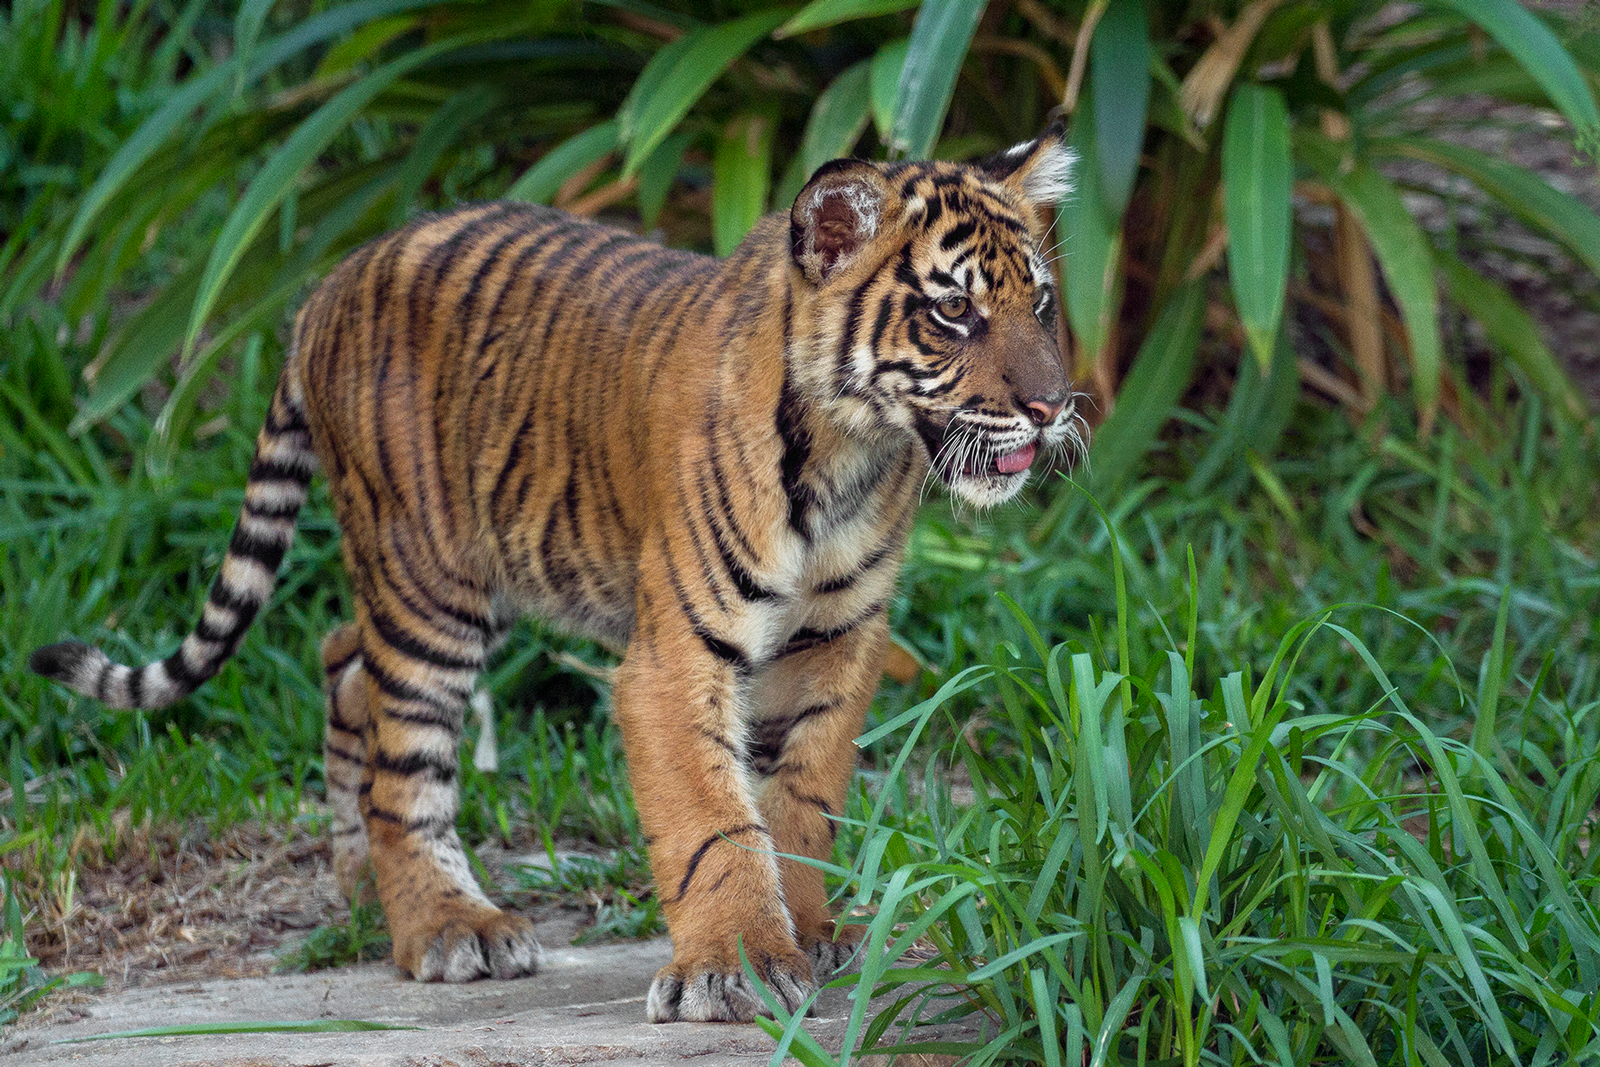 Tiger Cubs Explore New Habitat at the San Diego Zoo Safari Park